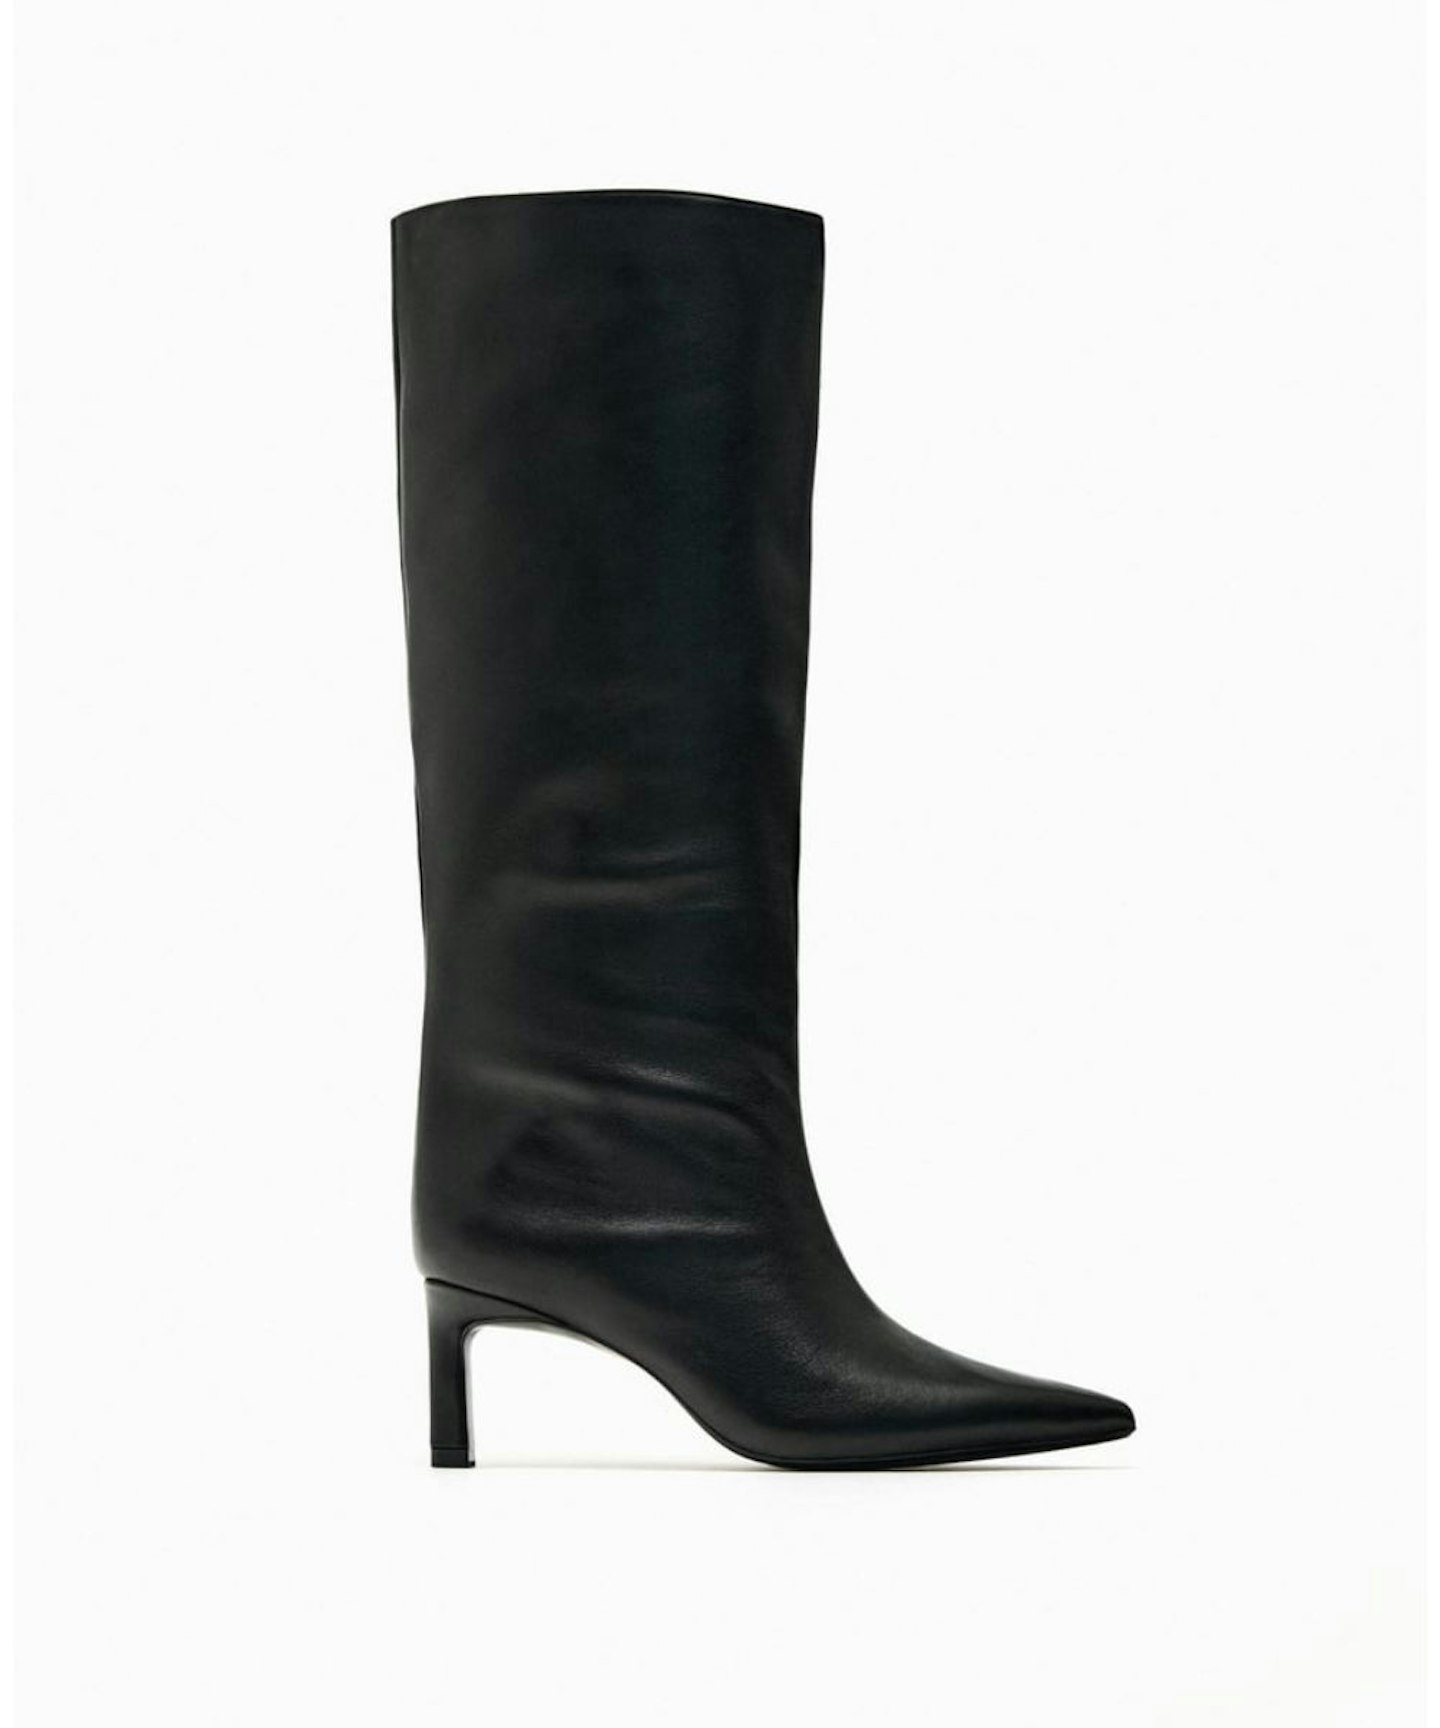 Leather High-Heel Boots, Zara